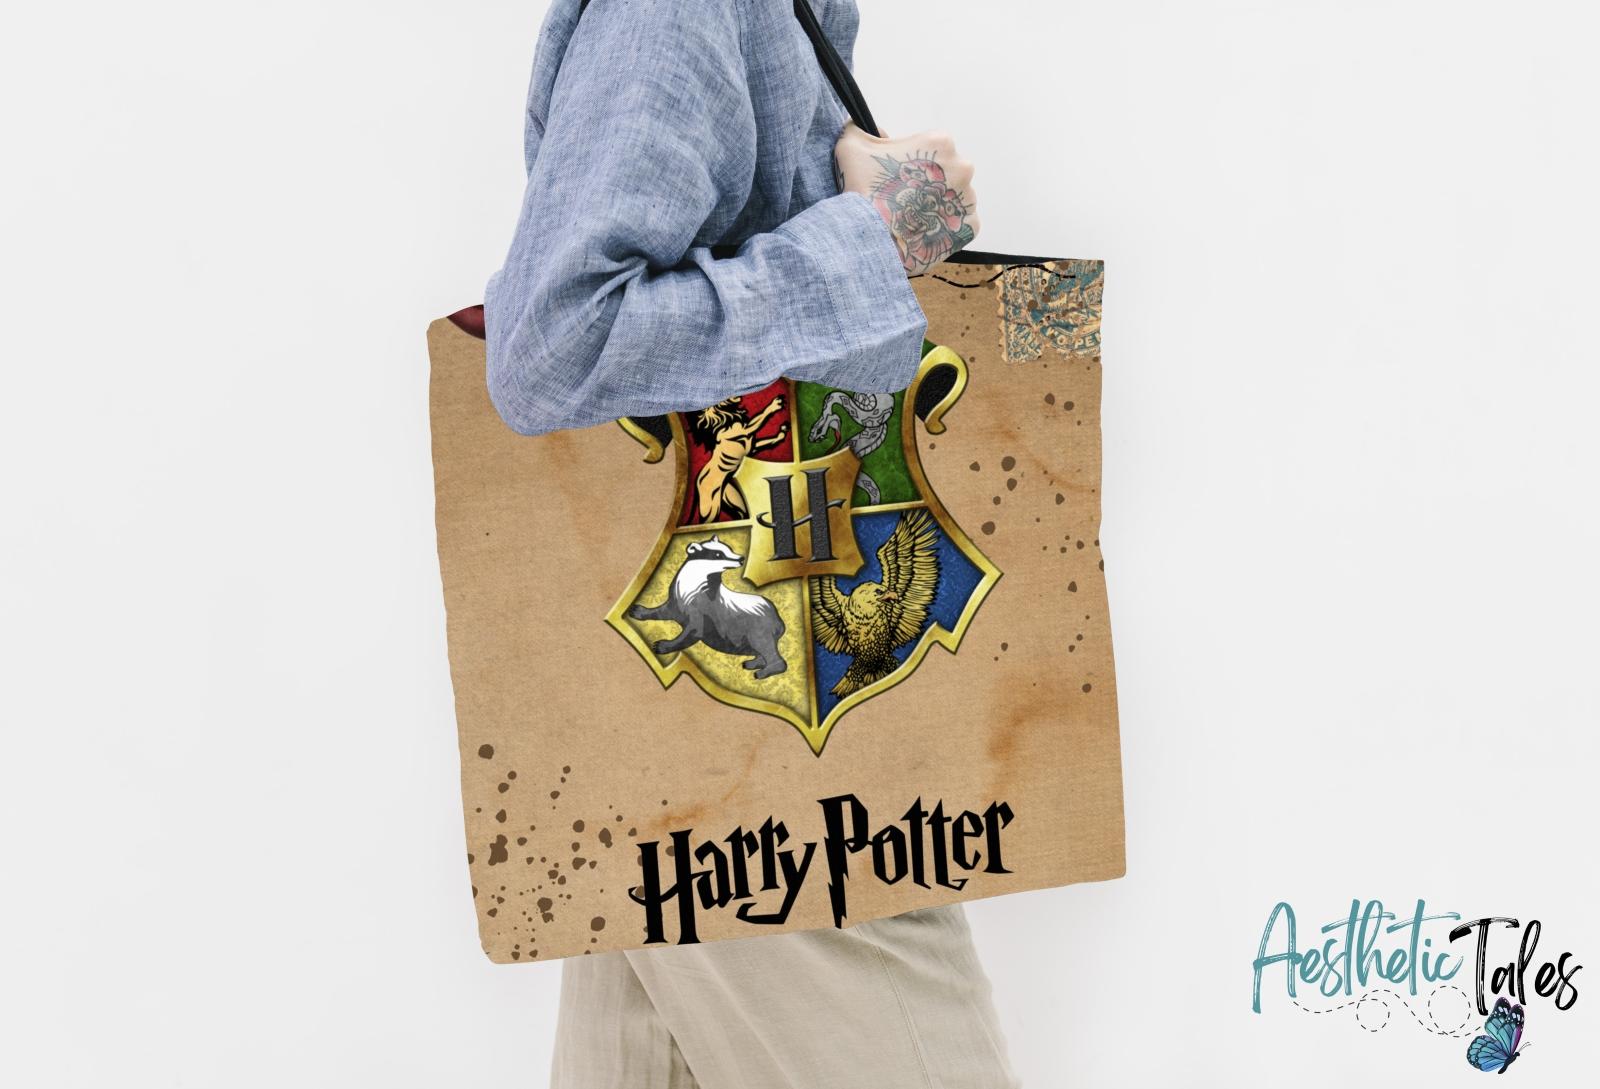 Harry Potter - Tote Bag